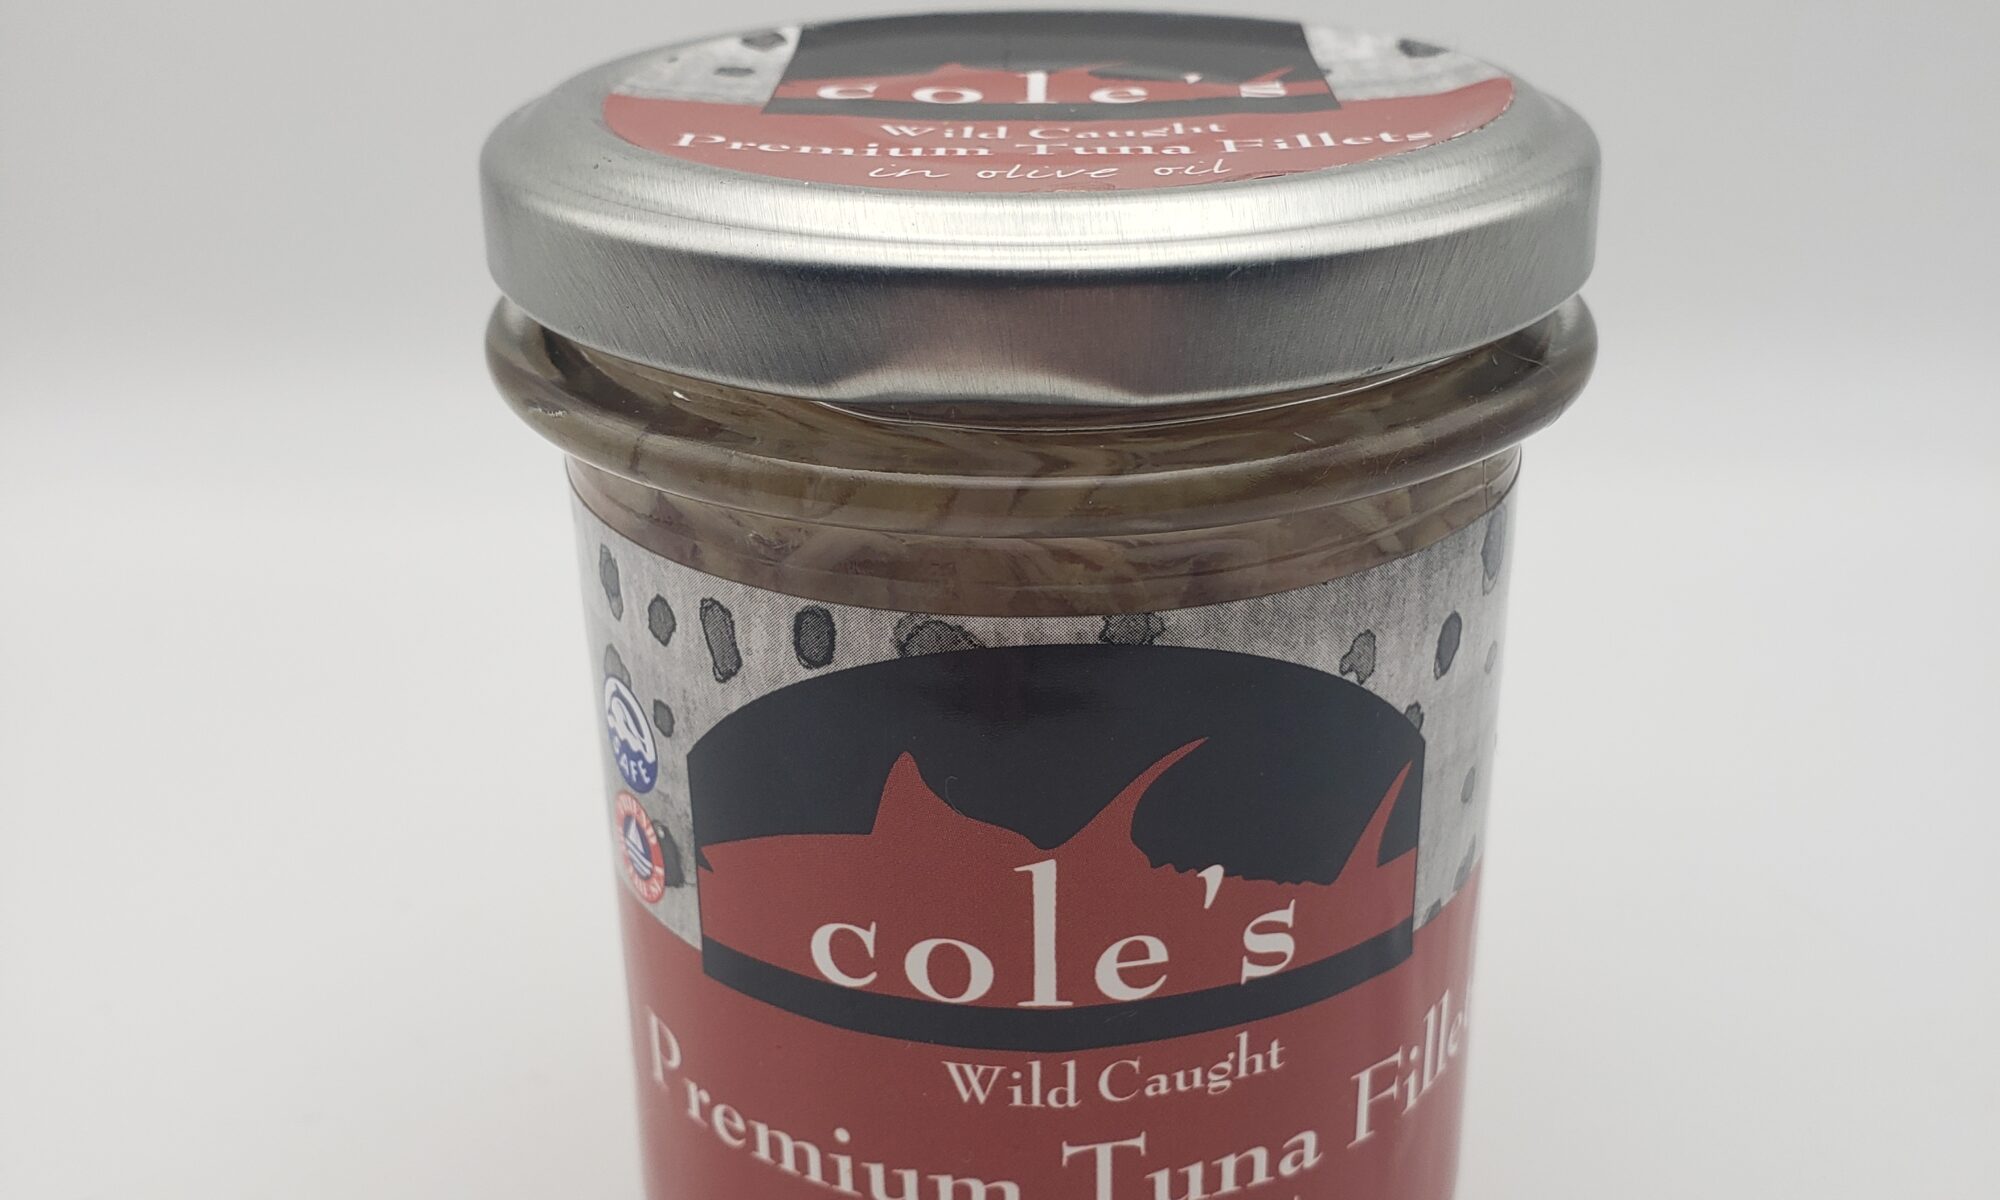 Image of Coles Tuna in Olive oil jar